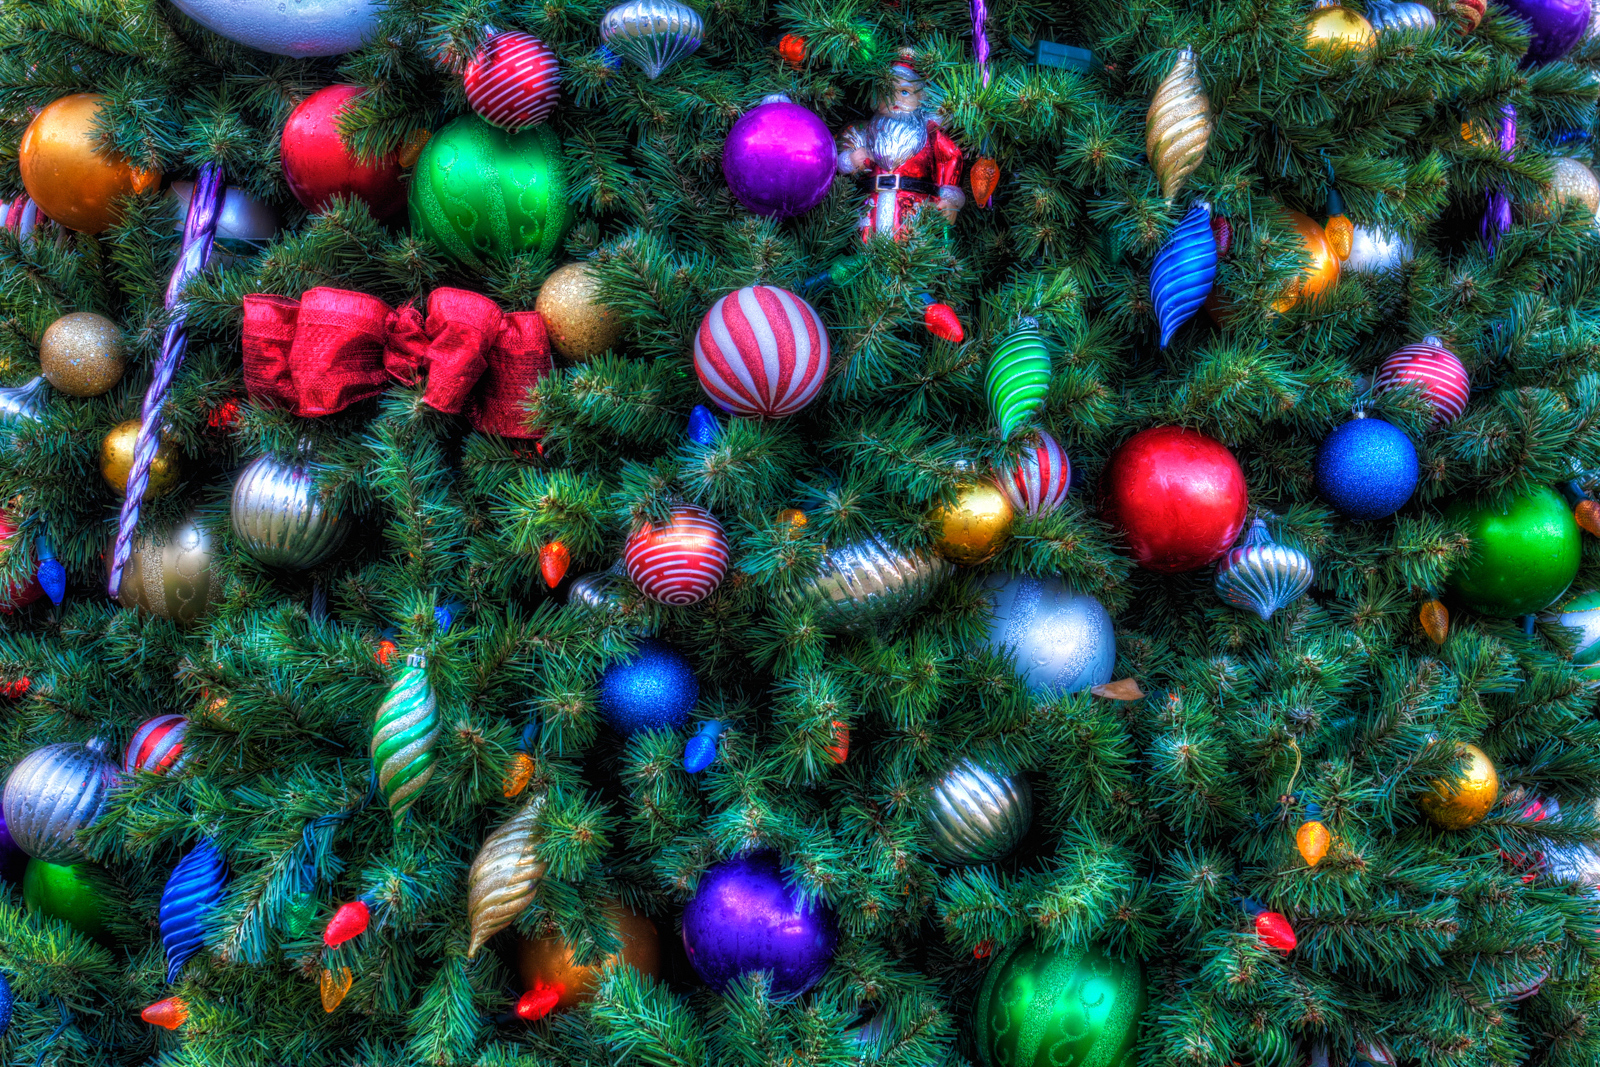 Ornaments on Boardwalk Christmas Tree